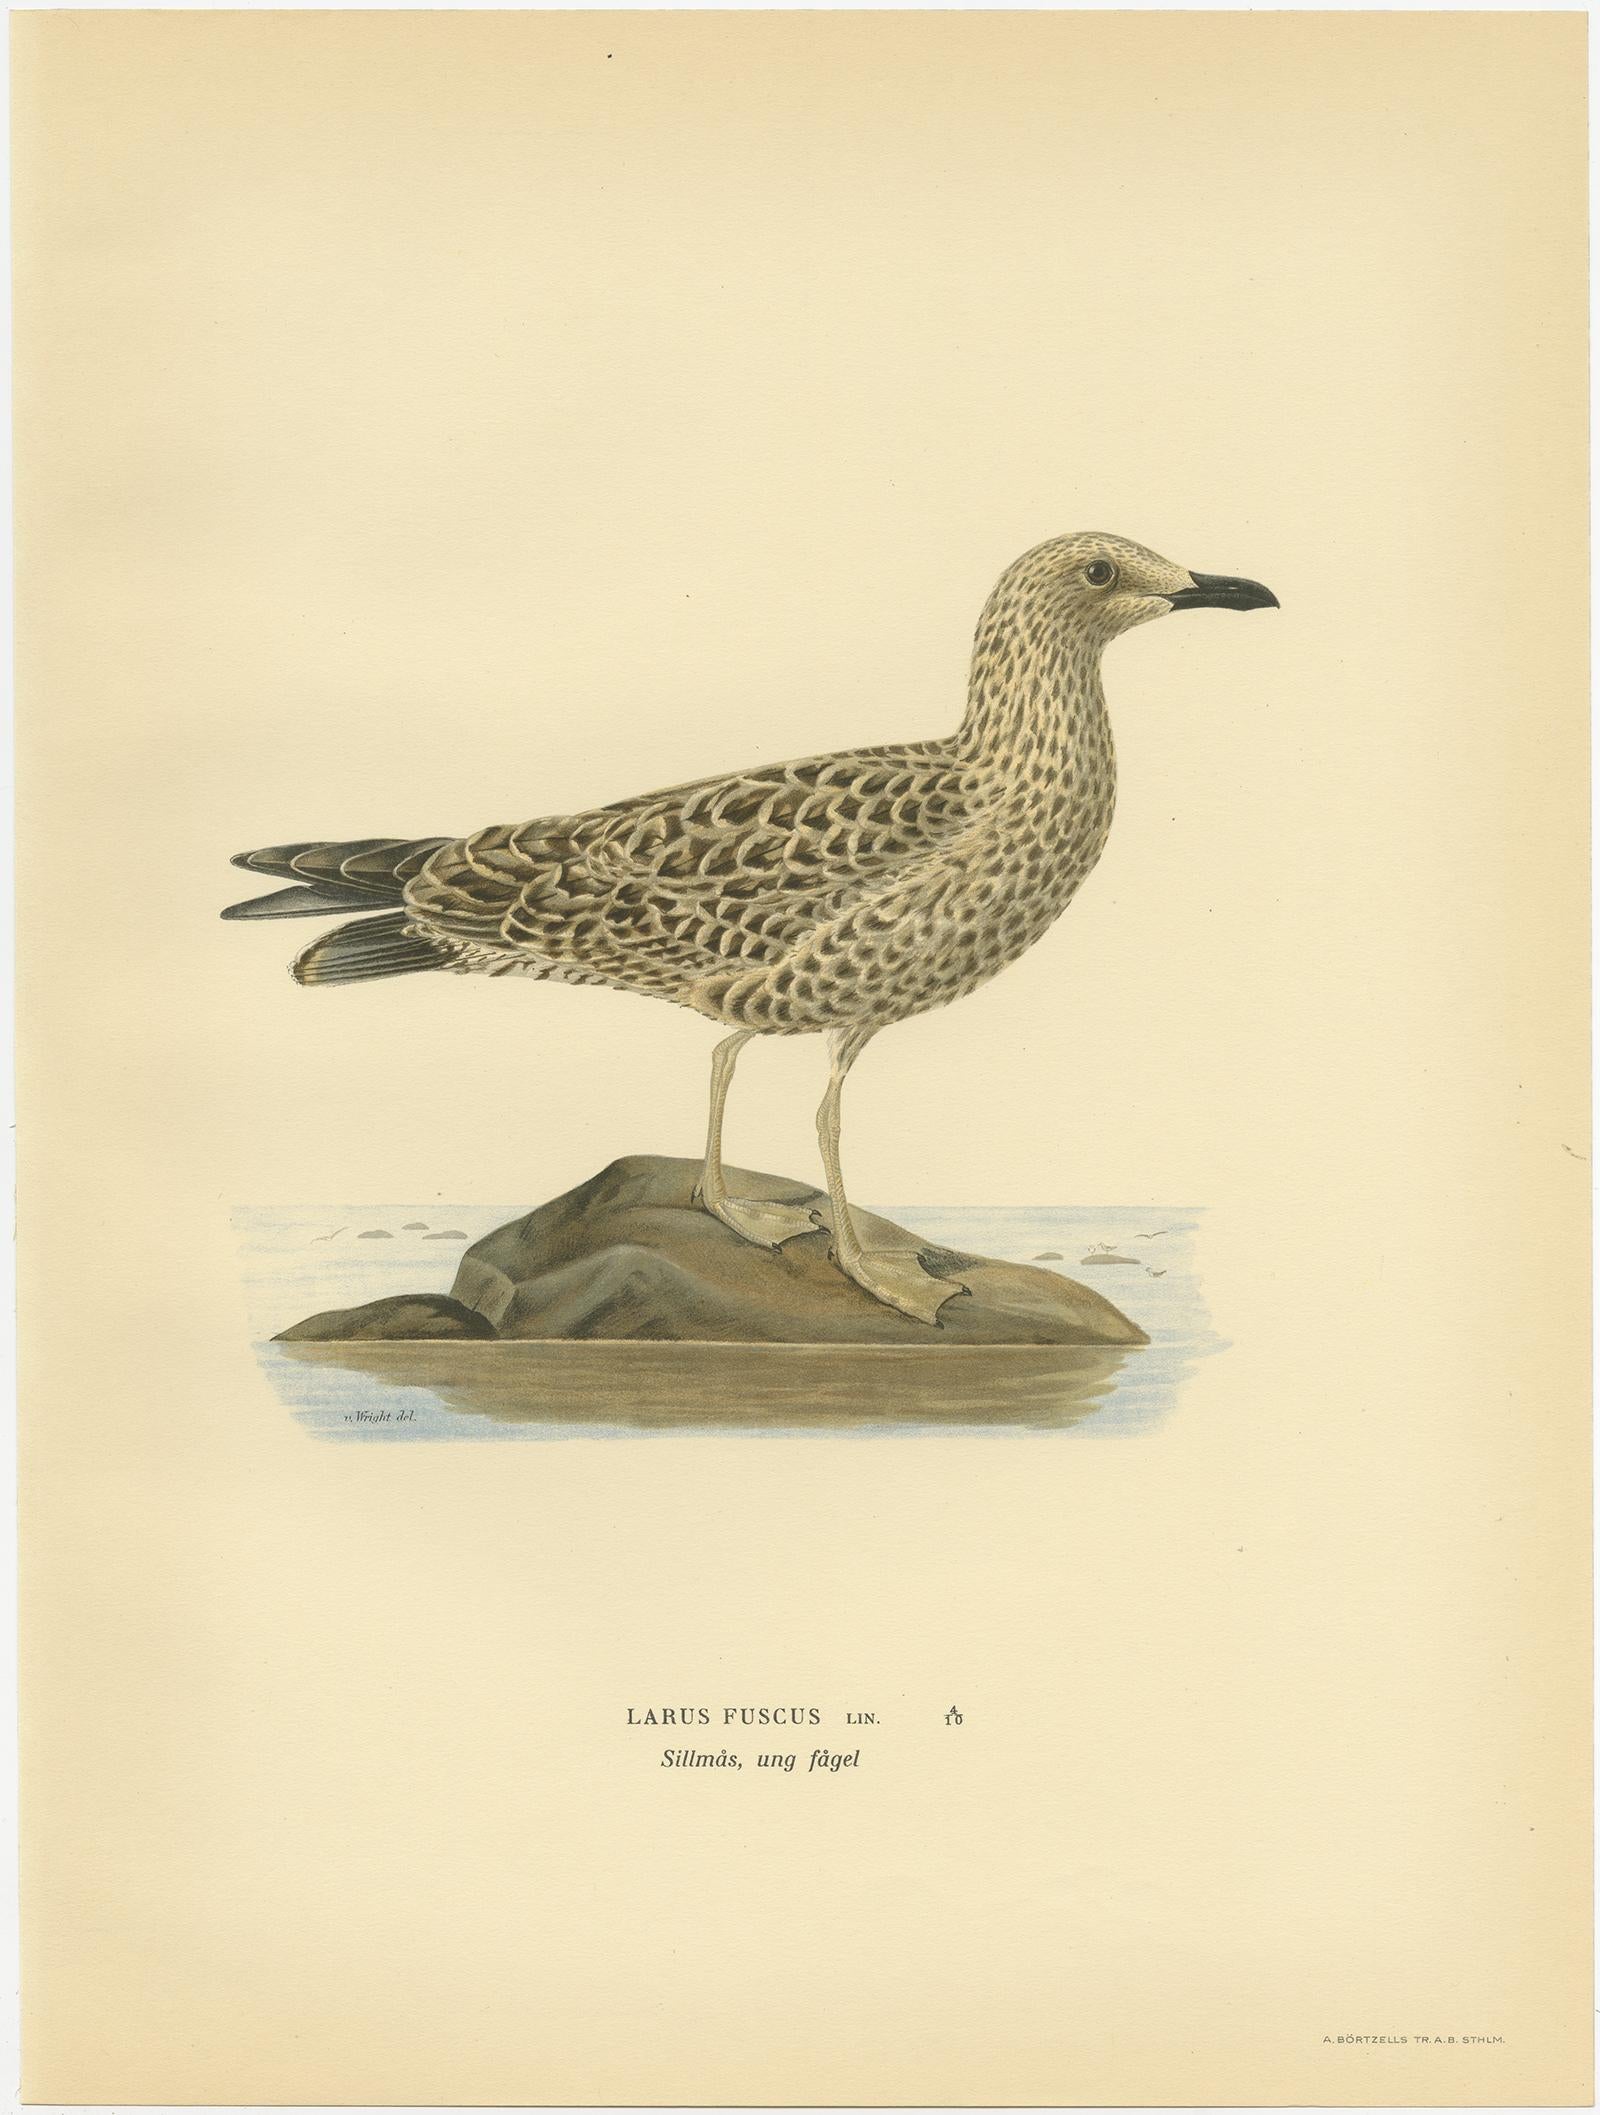 Antique bird print titled 'Larus Fuscus'. Old bird print depicting the Lesser Black-Backed Gull. This print originates from 'Svenska Foglar Efter Naturen Och Pa Stenritade' by Magnus von Wright.